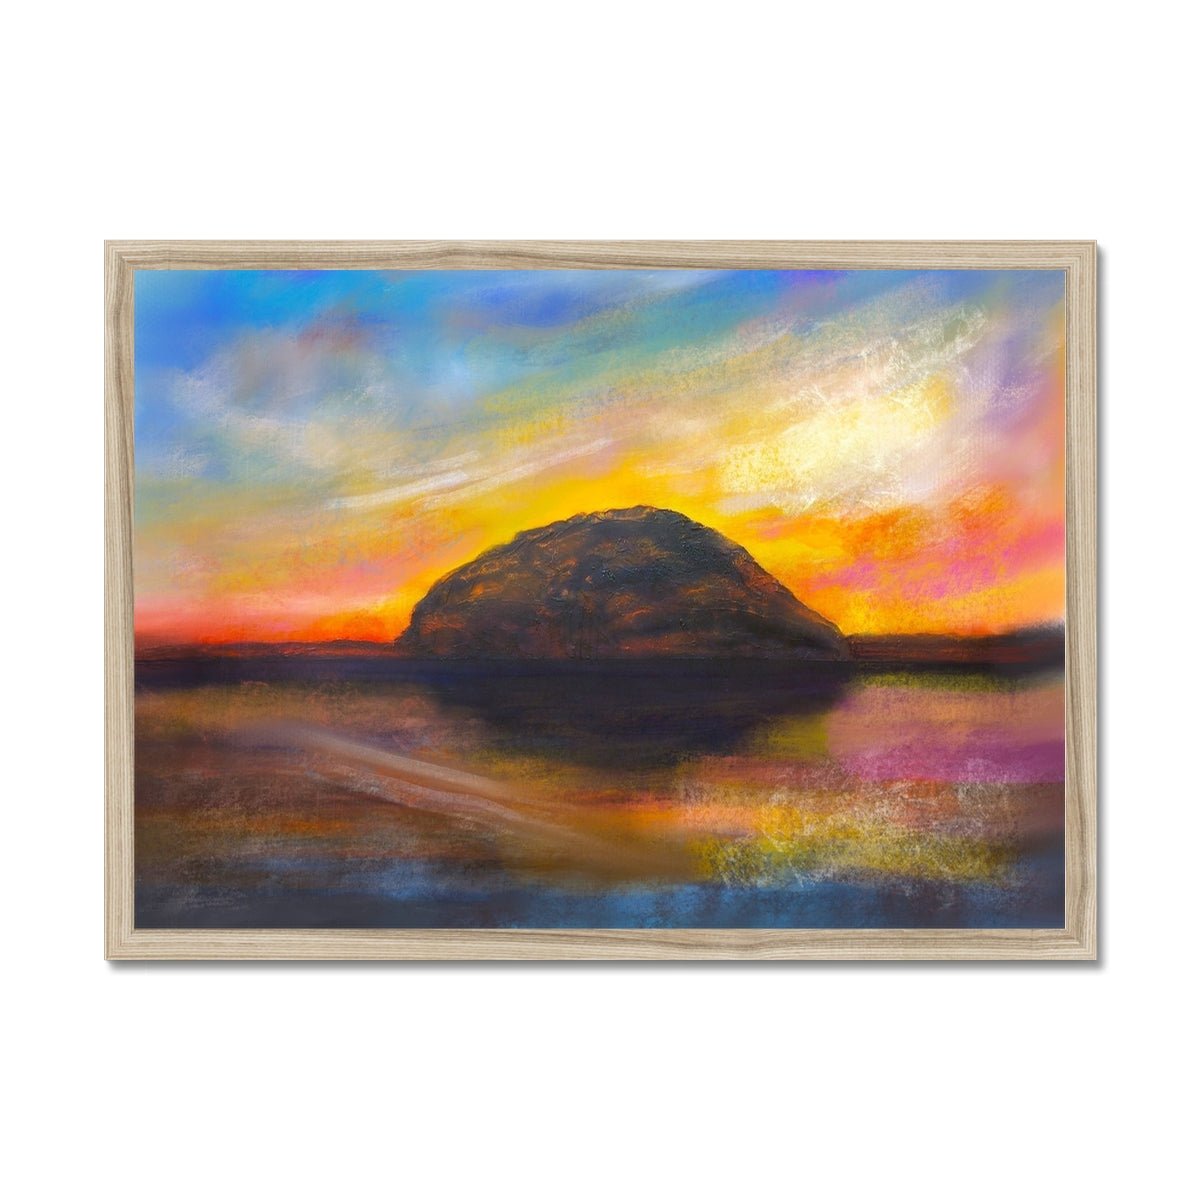 Ailsa Craig Dusk Painting | Framed Prints From Scotland-Framed Prints-Arran Art Gallery-A2 Landscape-Natural Frame-Paintings, Prints, Homeware, Art Gifts From Scotland By Scottish Artist Kevin Hunter